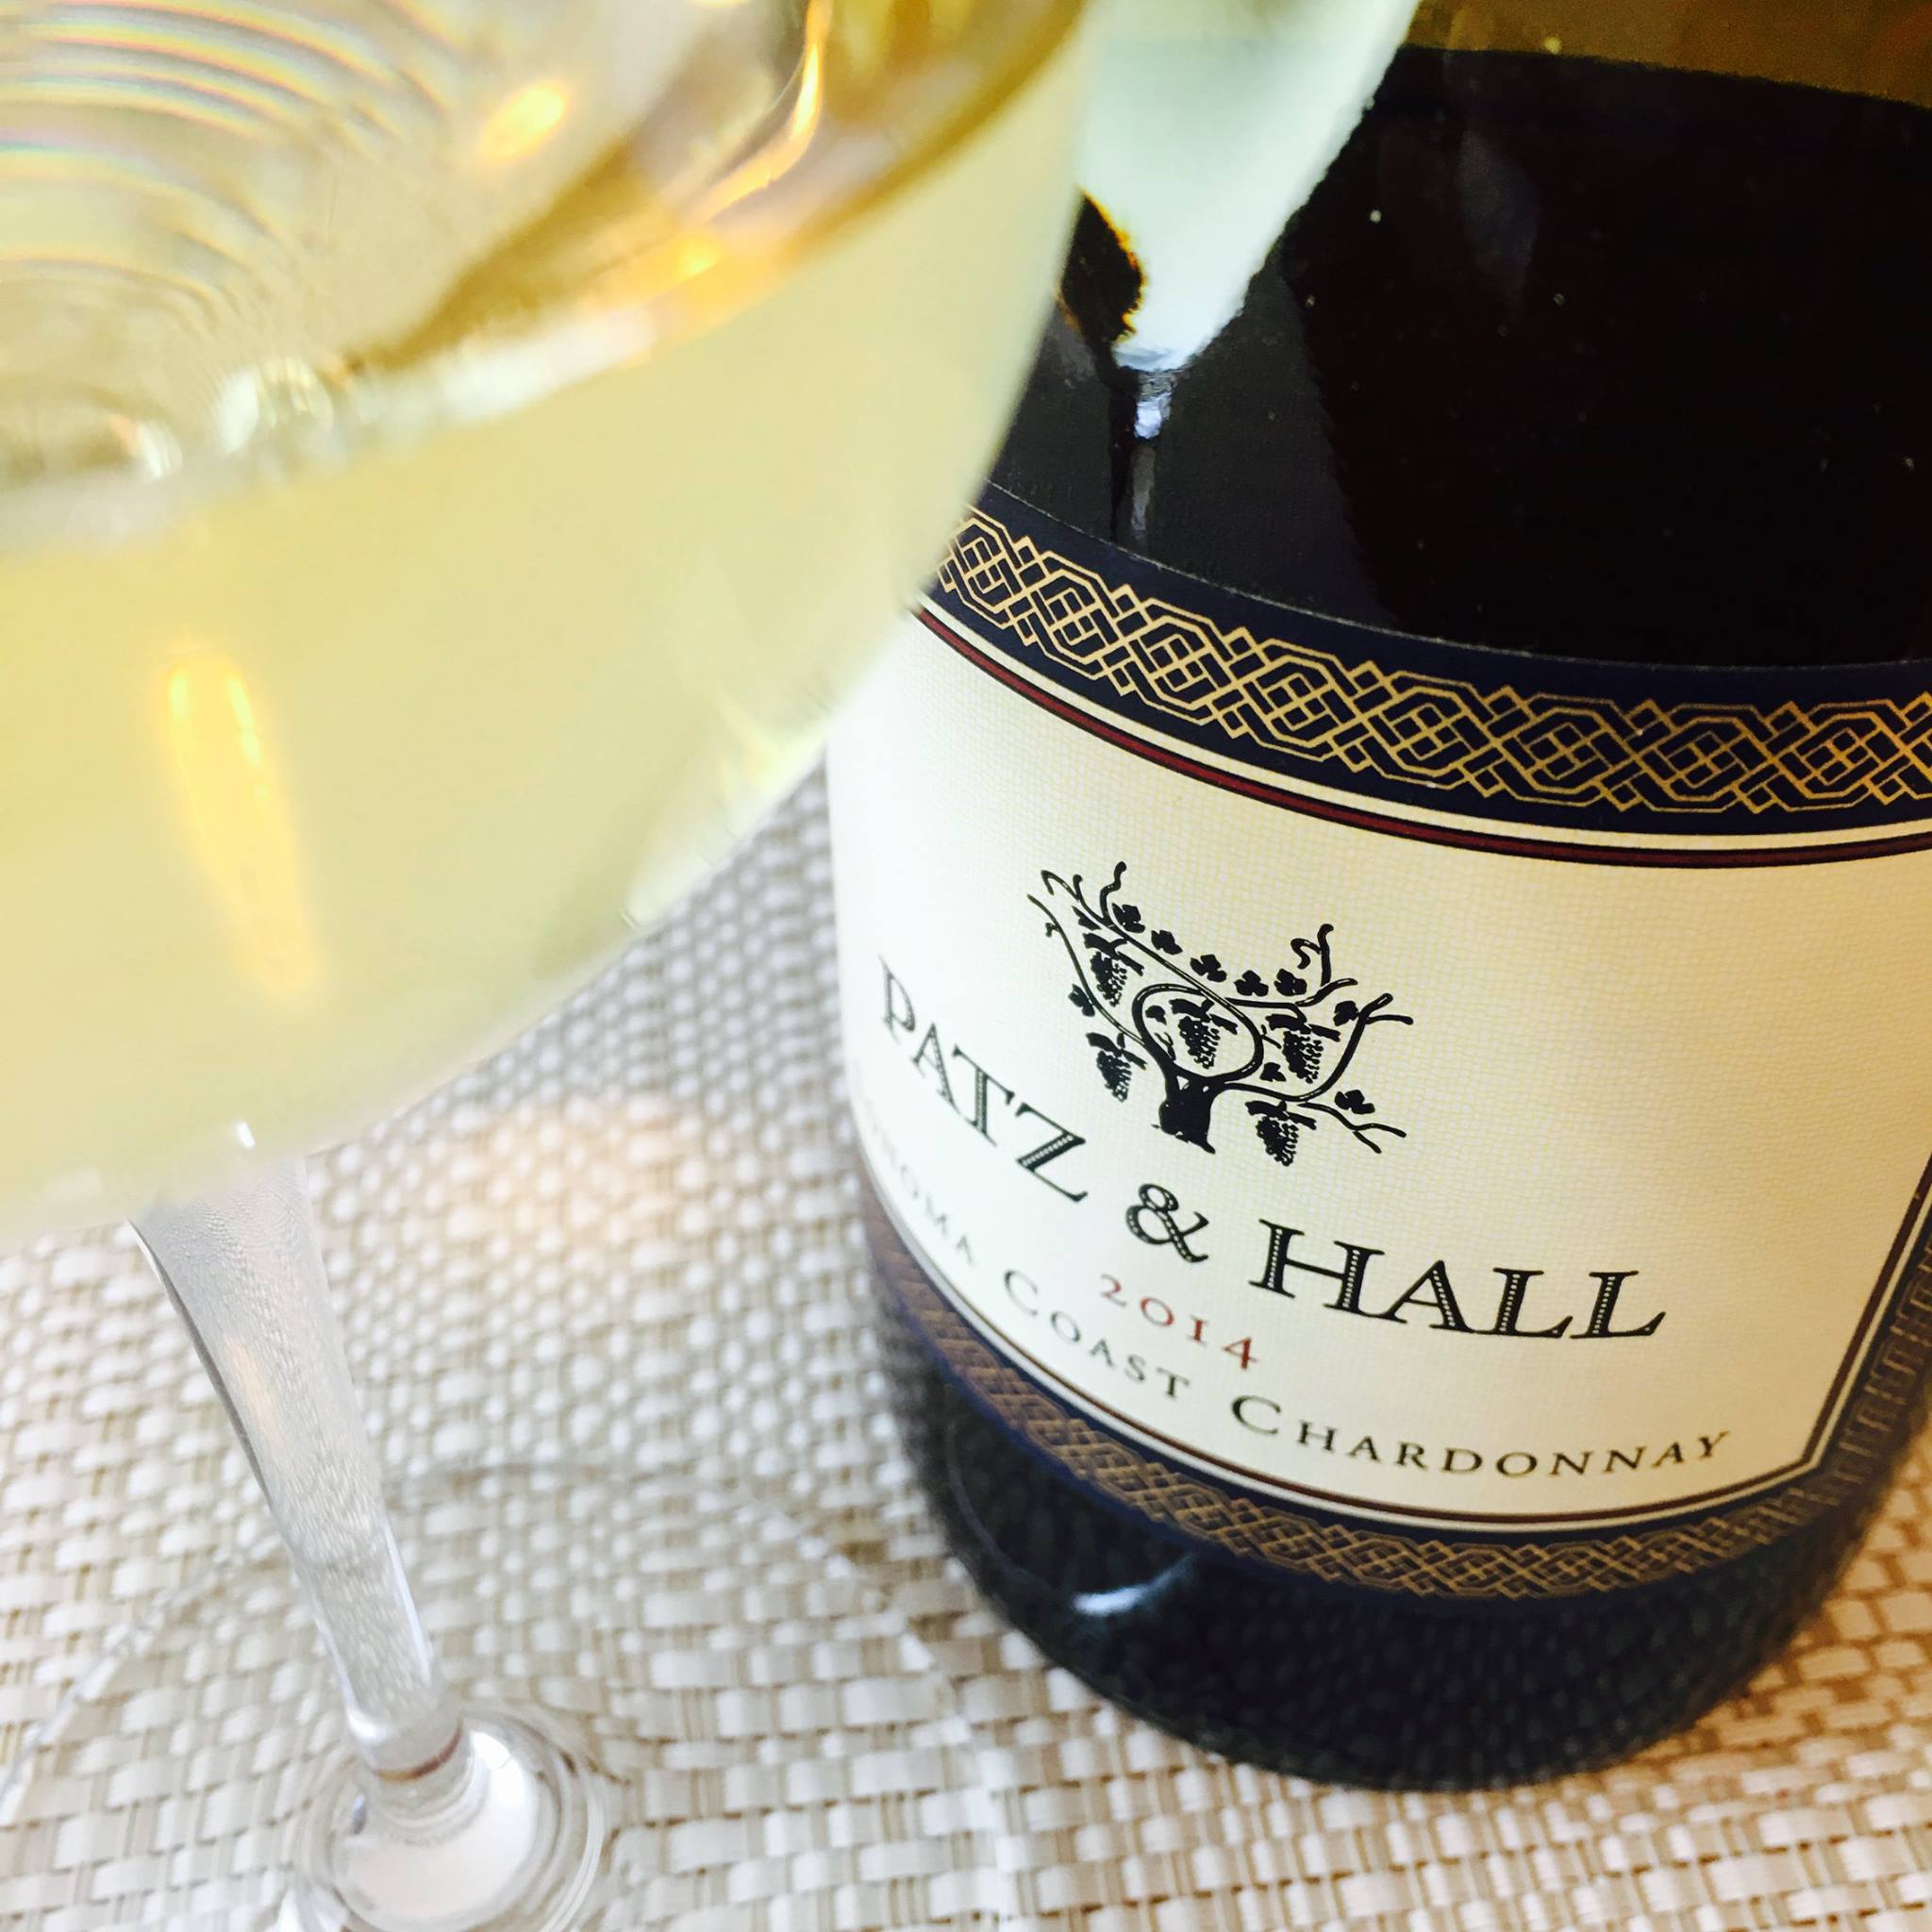 2014 Patz & Hall Chardonnay Sonoma Coast